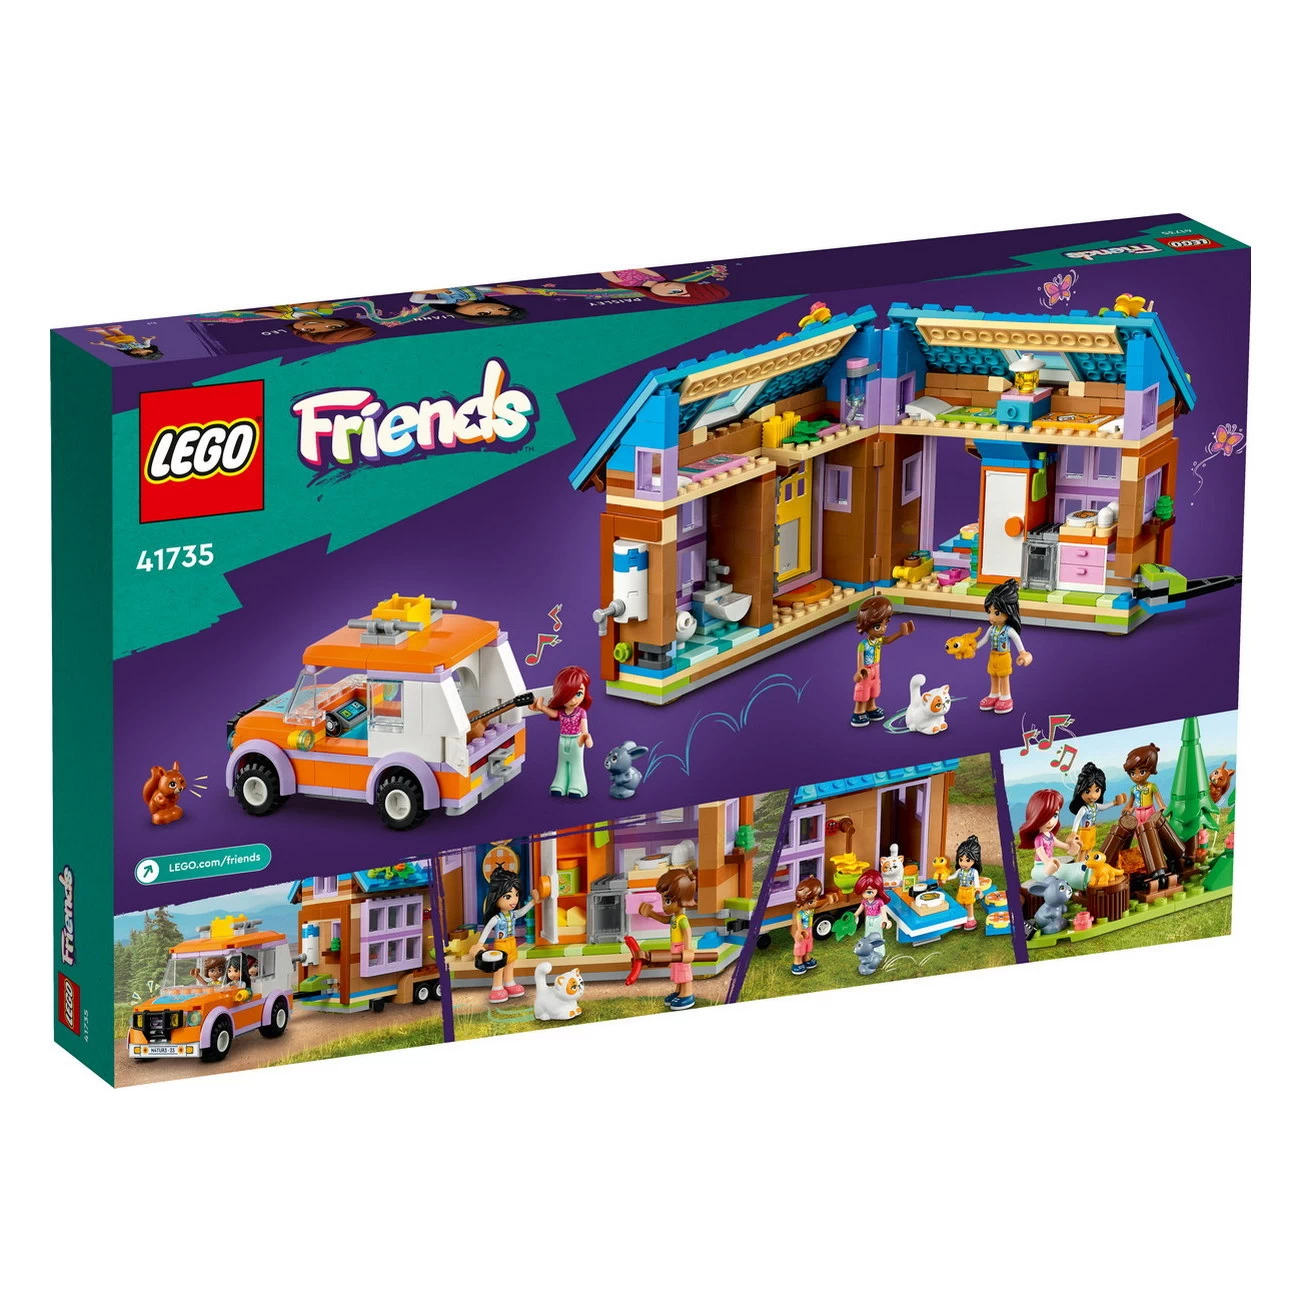 LEGO Friends 41735 - Mobiles Haus